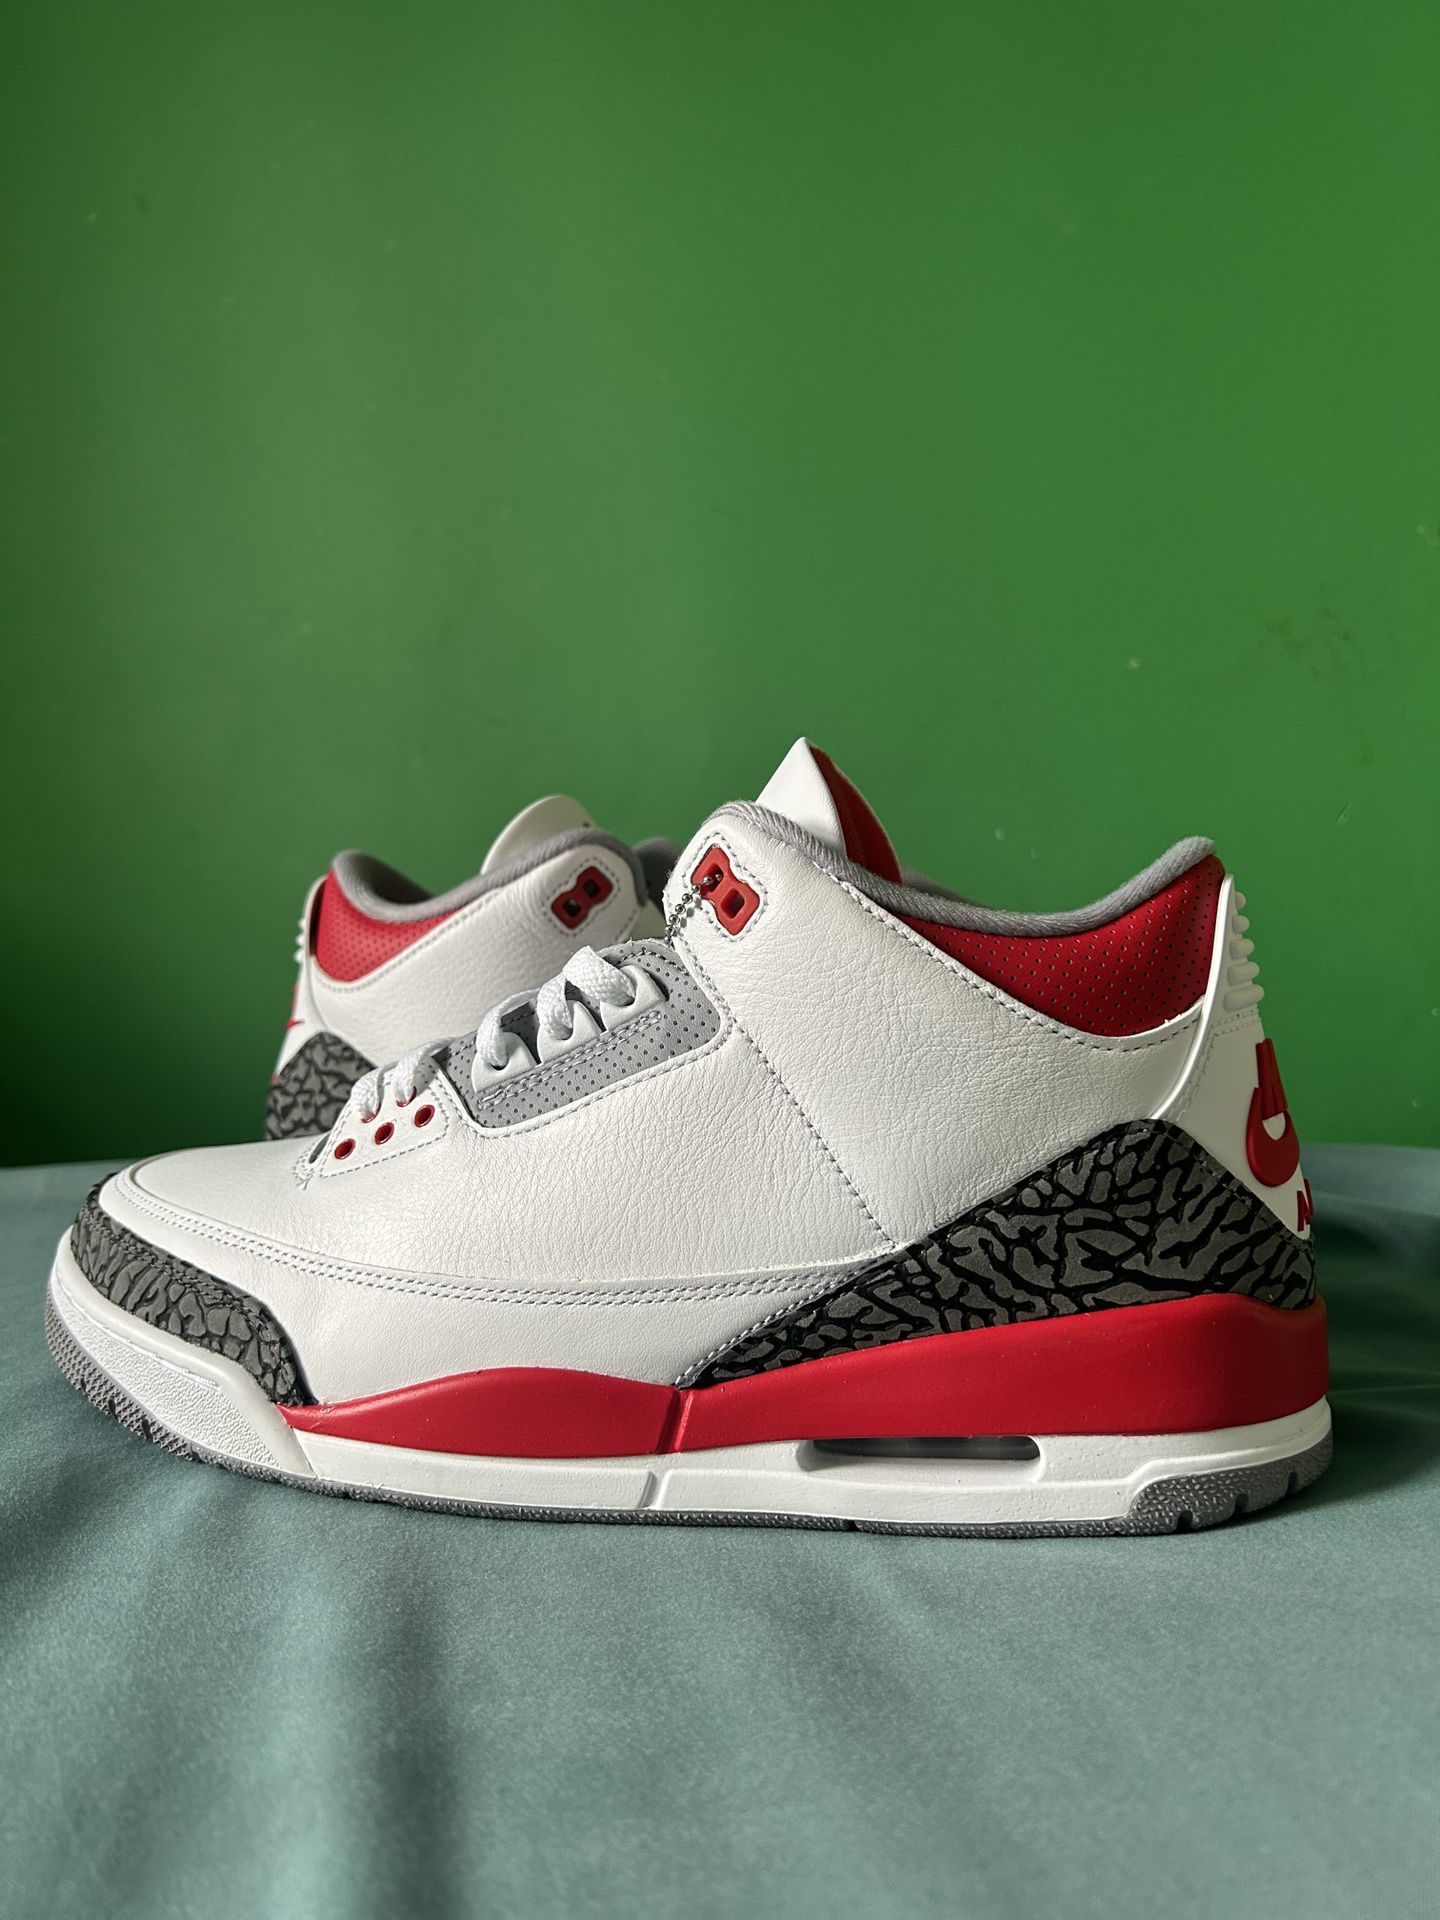 Nike Air Jordan 3 Fire Red Size 11.5